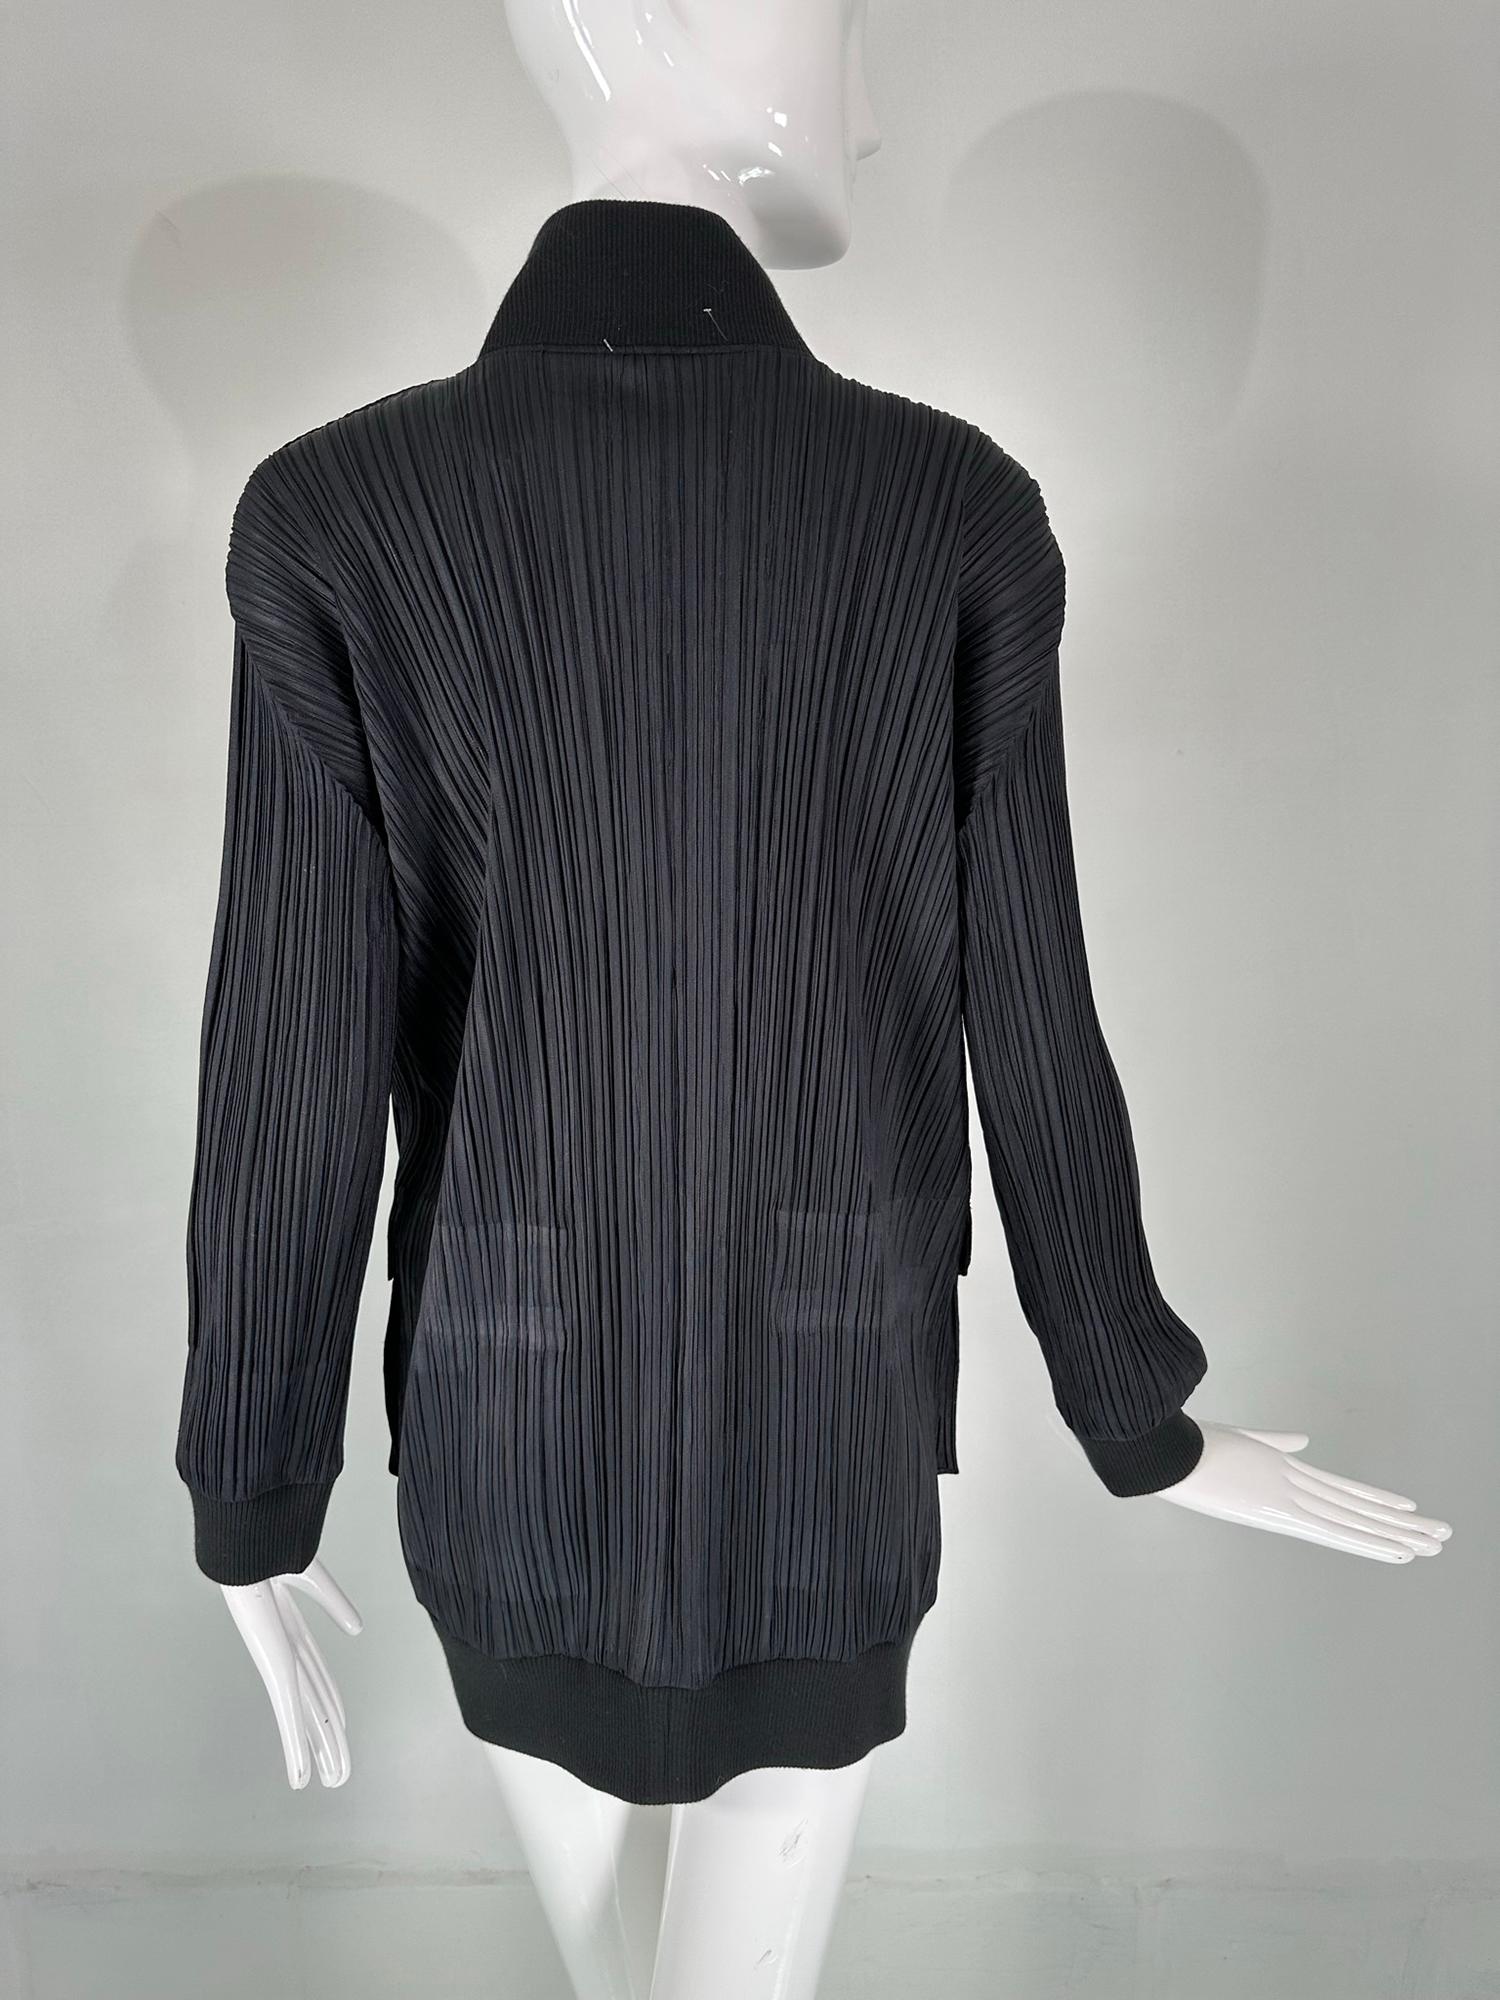 Issey Miyake Pleats Please Black Funnel Neck Hidden Zipper Front Long Jacket 3 For Sale 4